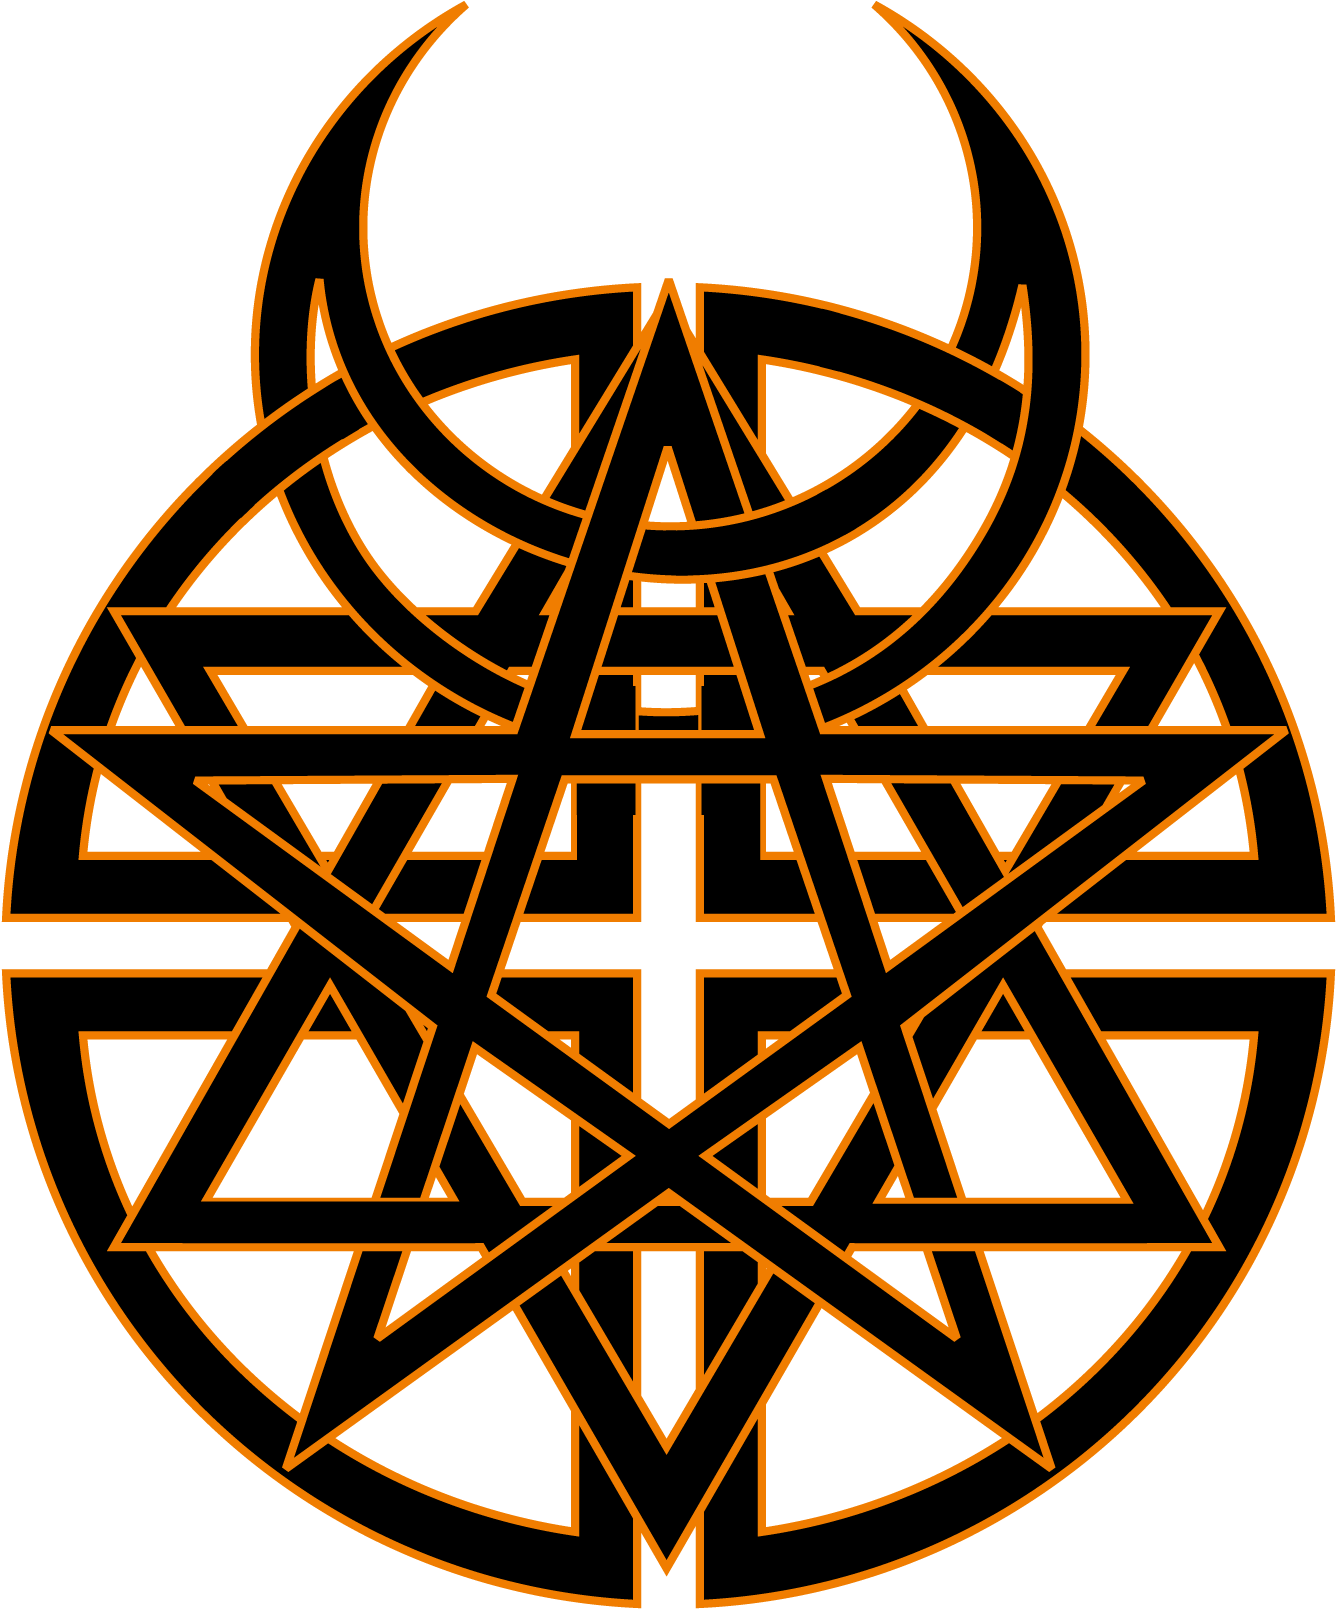 Знак пентакля. Дистурбед лого. Пентаграмма дьявола со знаками. Знаки сатанинские пентаграммы. Пентаграмма символ сатанизма.